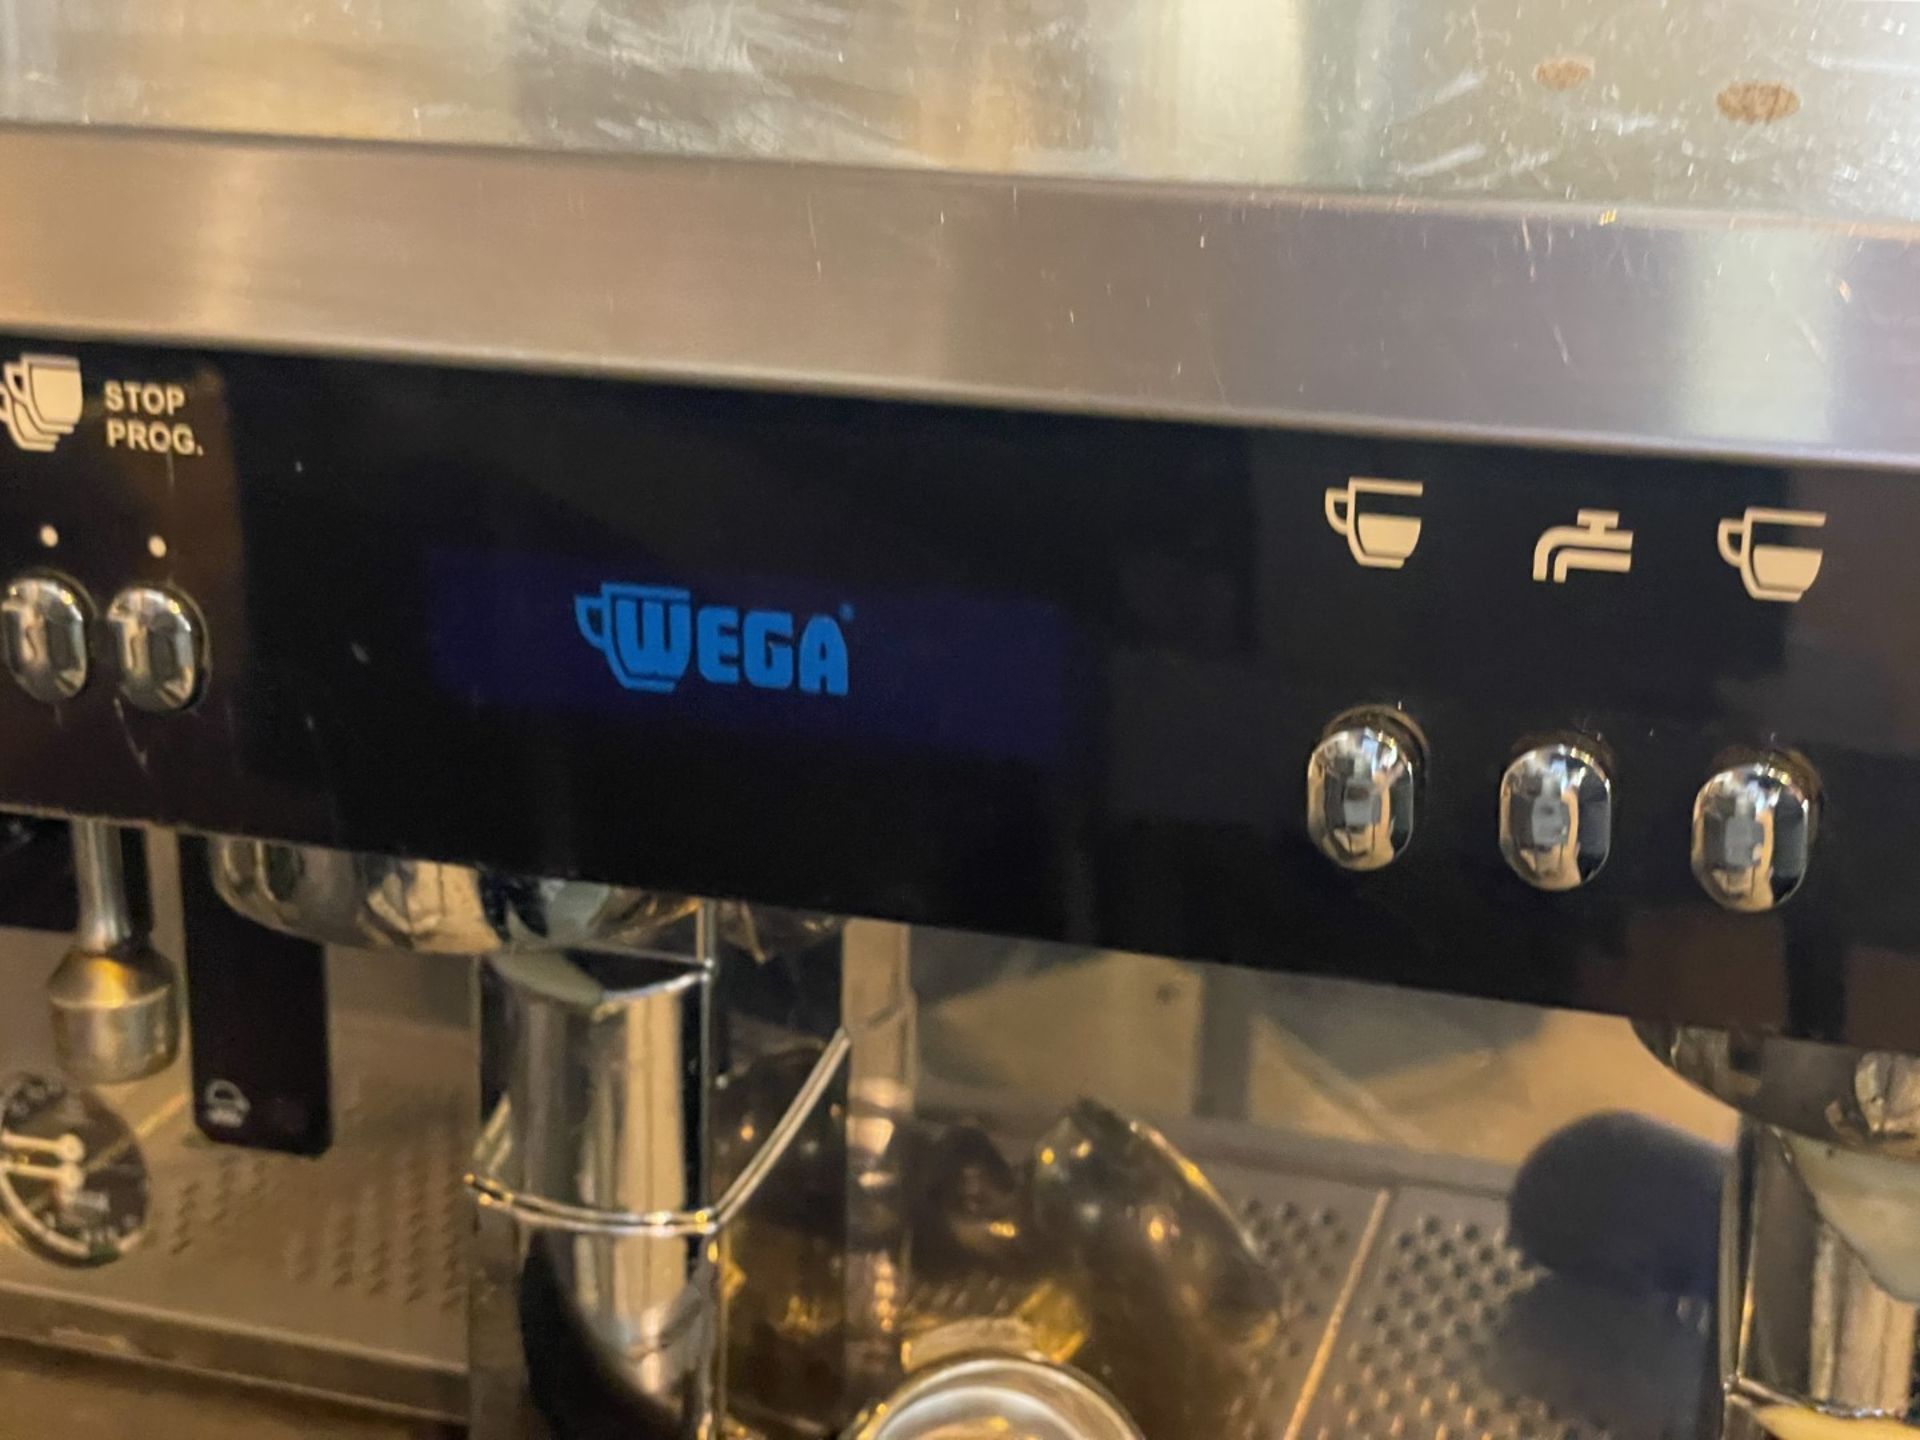 1 x Polaris Wega 3 Group Commercial Espresso Coffee Machine - Stainless Steel / Black Exterior - 3 P - Image 9 of 9